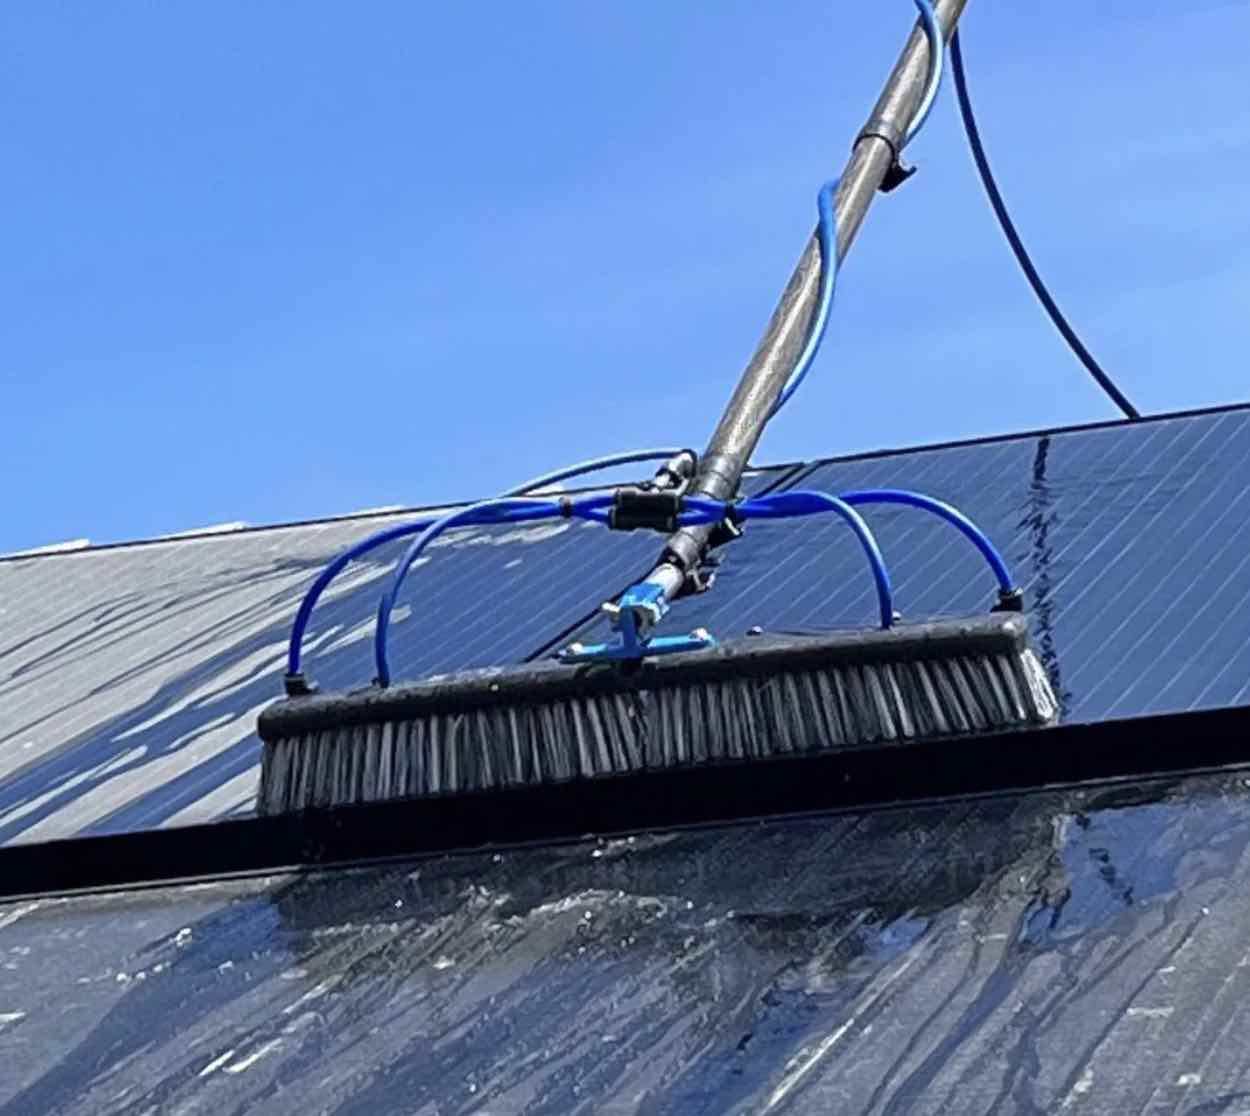 brush cleaning solar panel